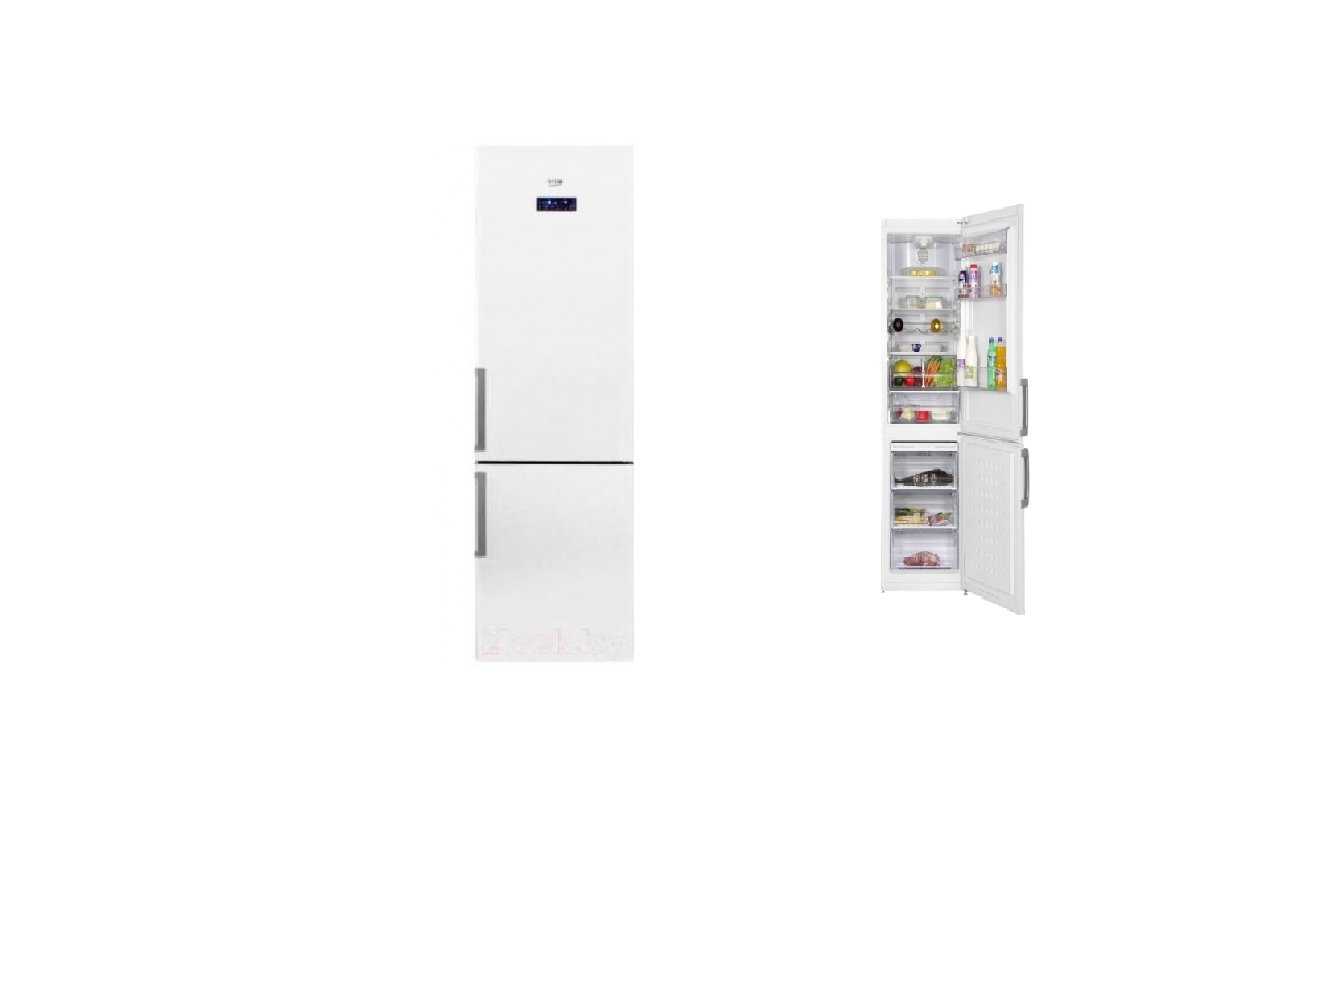 холодильник beko rcnk295e21, купить в Красноярске холодильник beko rcnk295e21,  купить в Красноярске дешево холодильник beko rcnk295e21, купить в Красноярске минимальной цене холодильник beko rcnk295e21